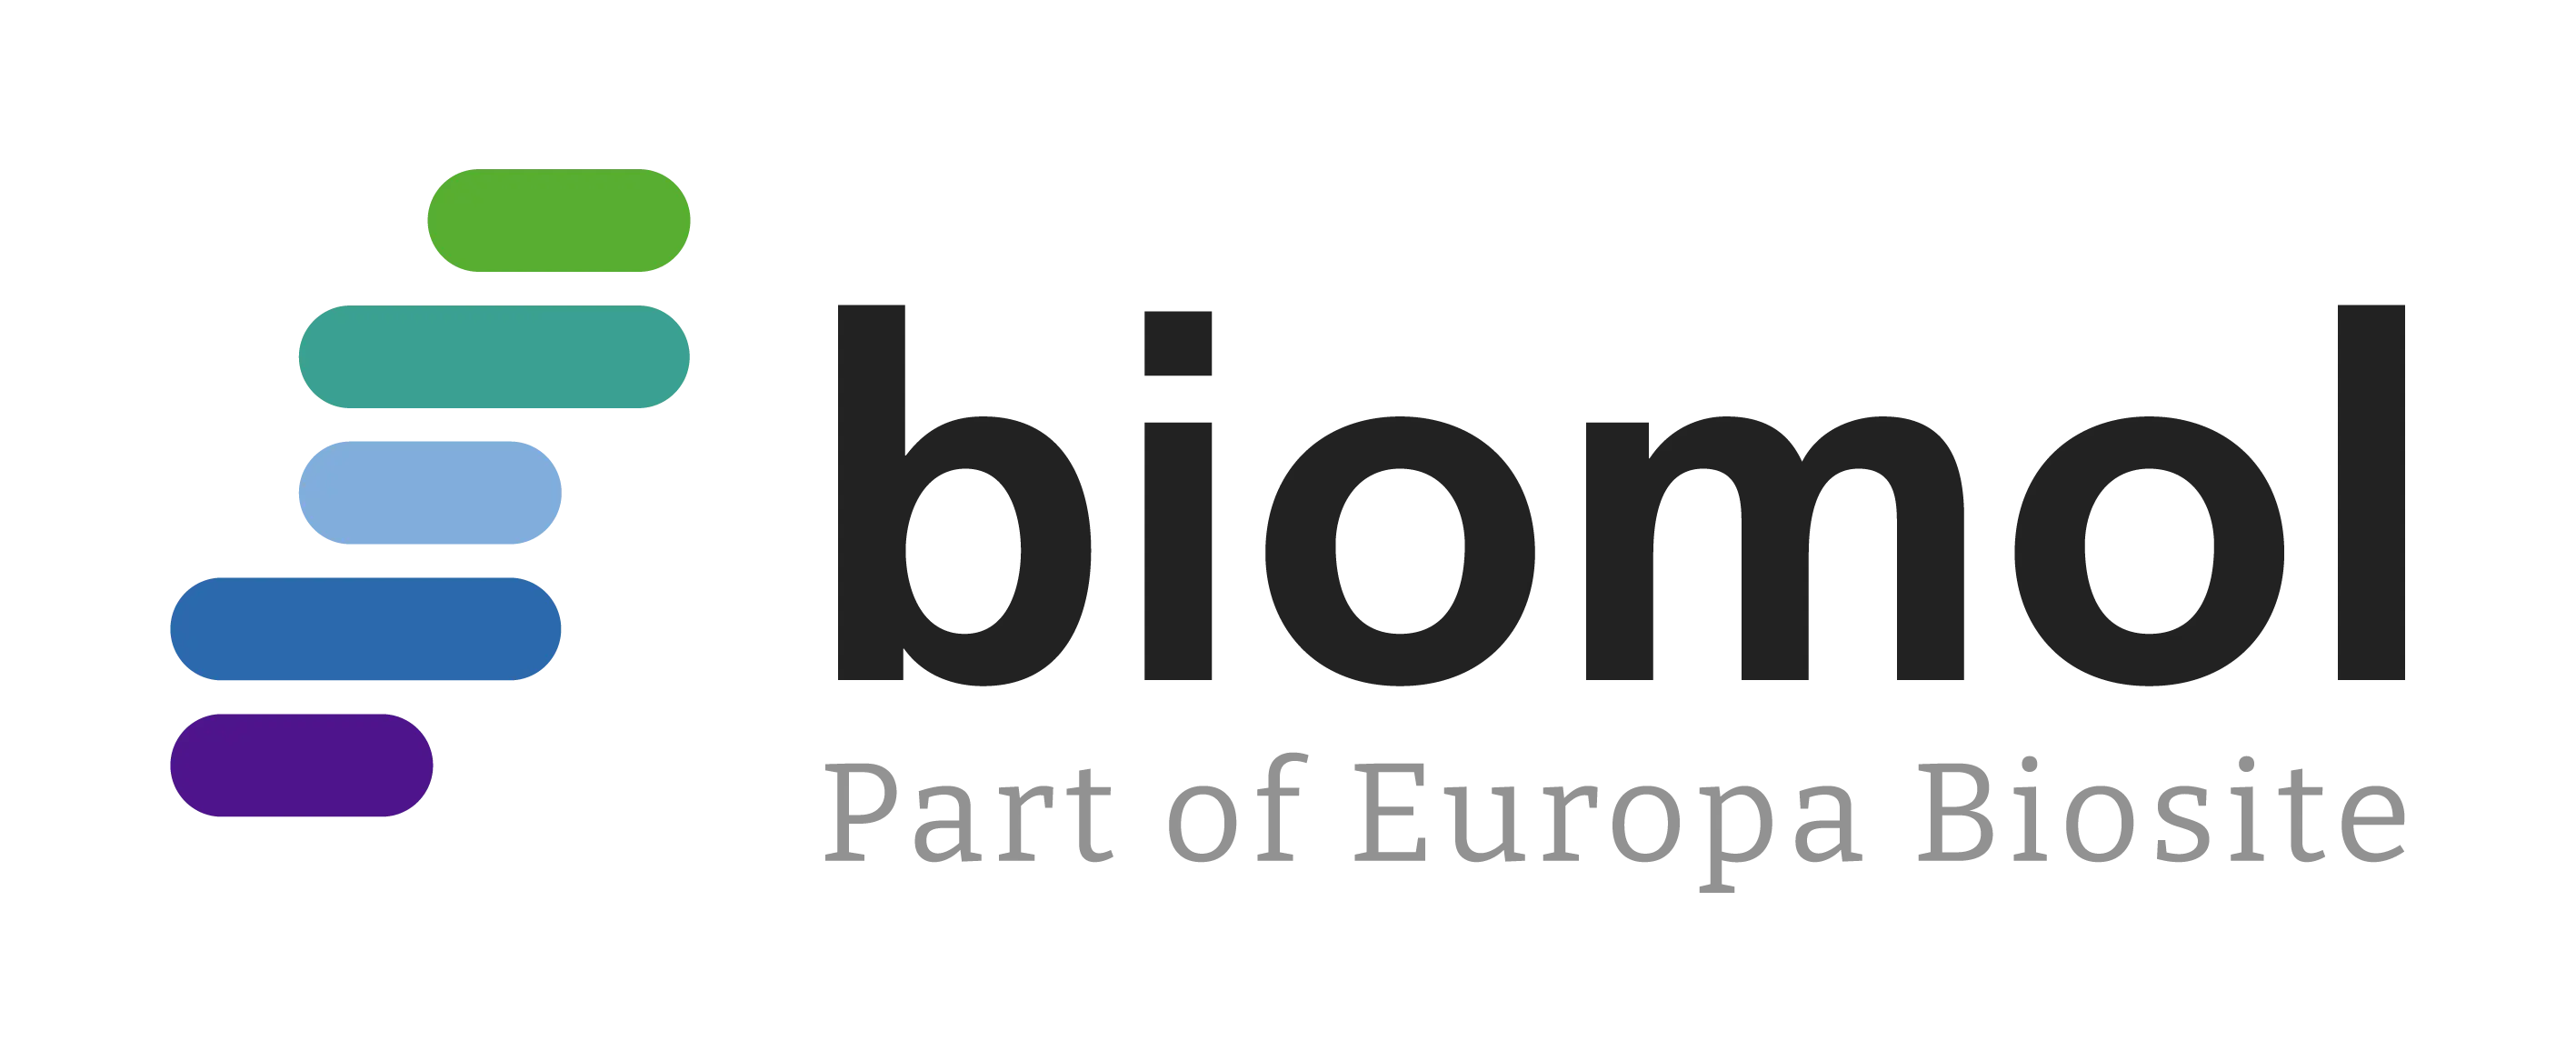 Biomol GmbH